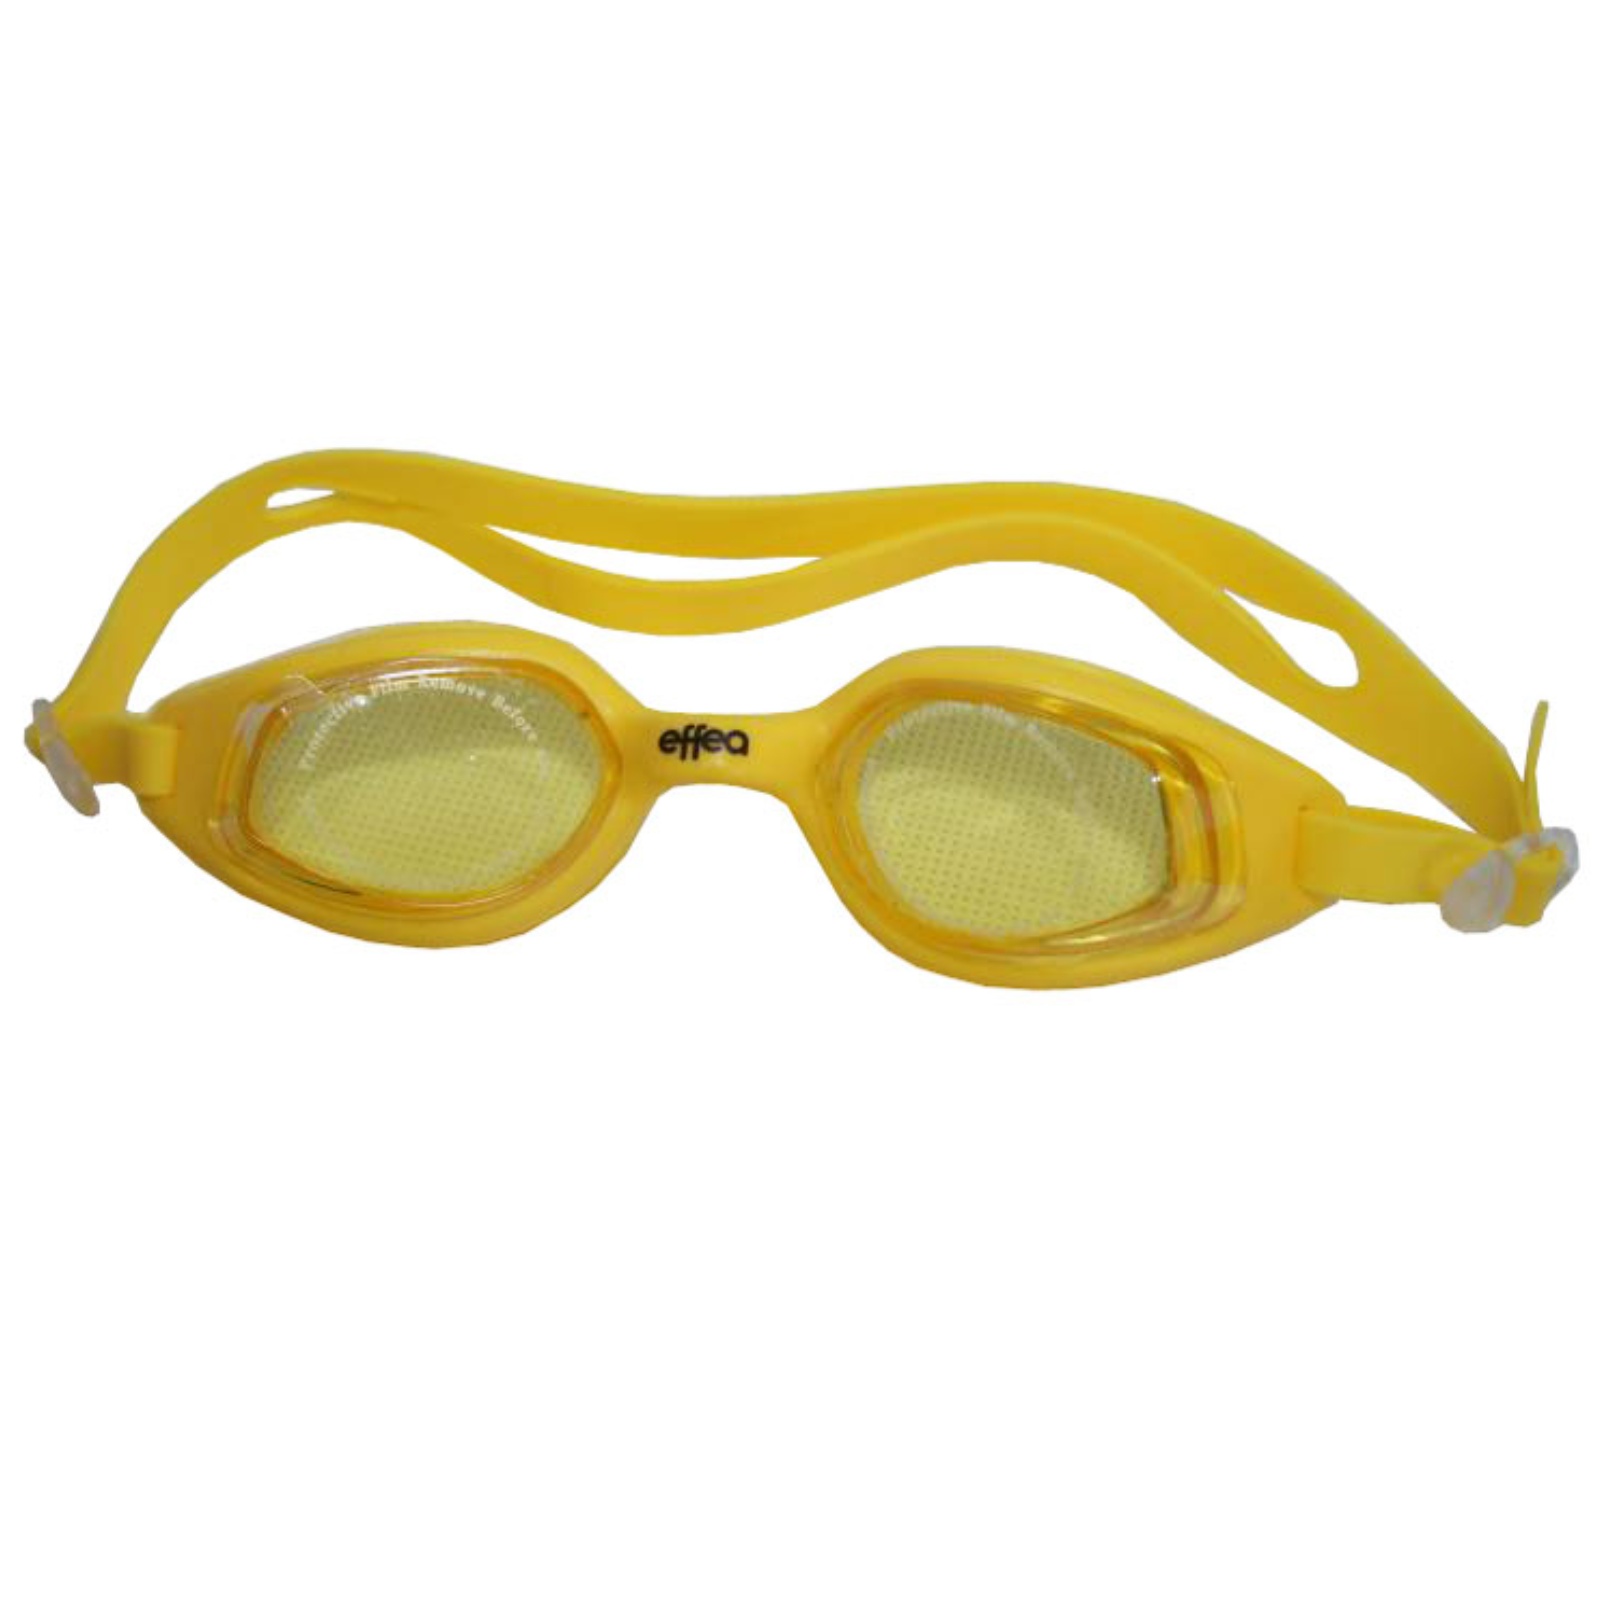 Plavecké brýle EFFEA 2610 junior